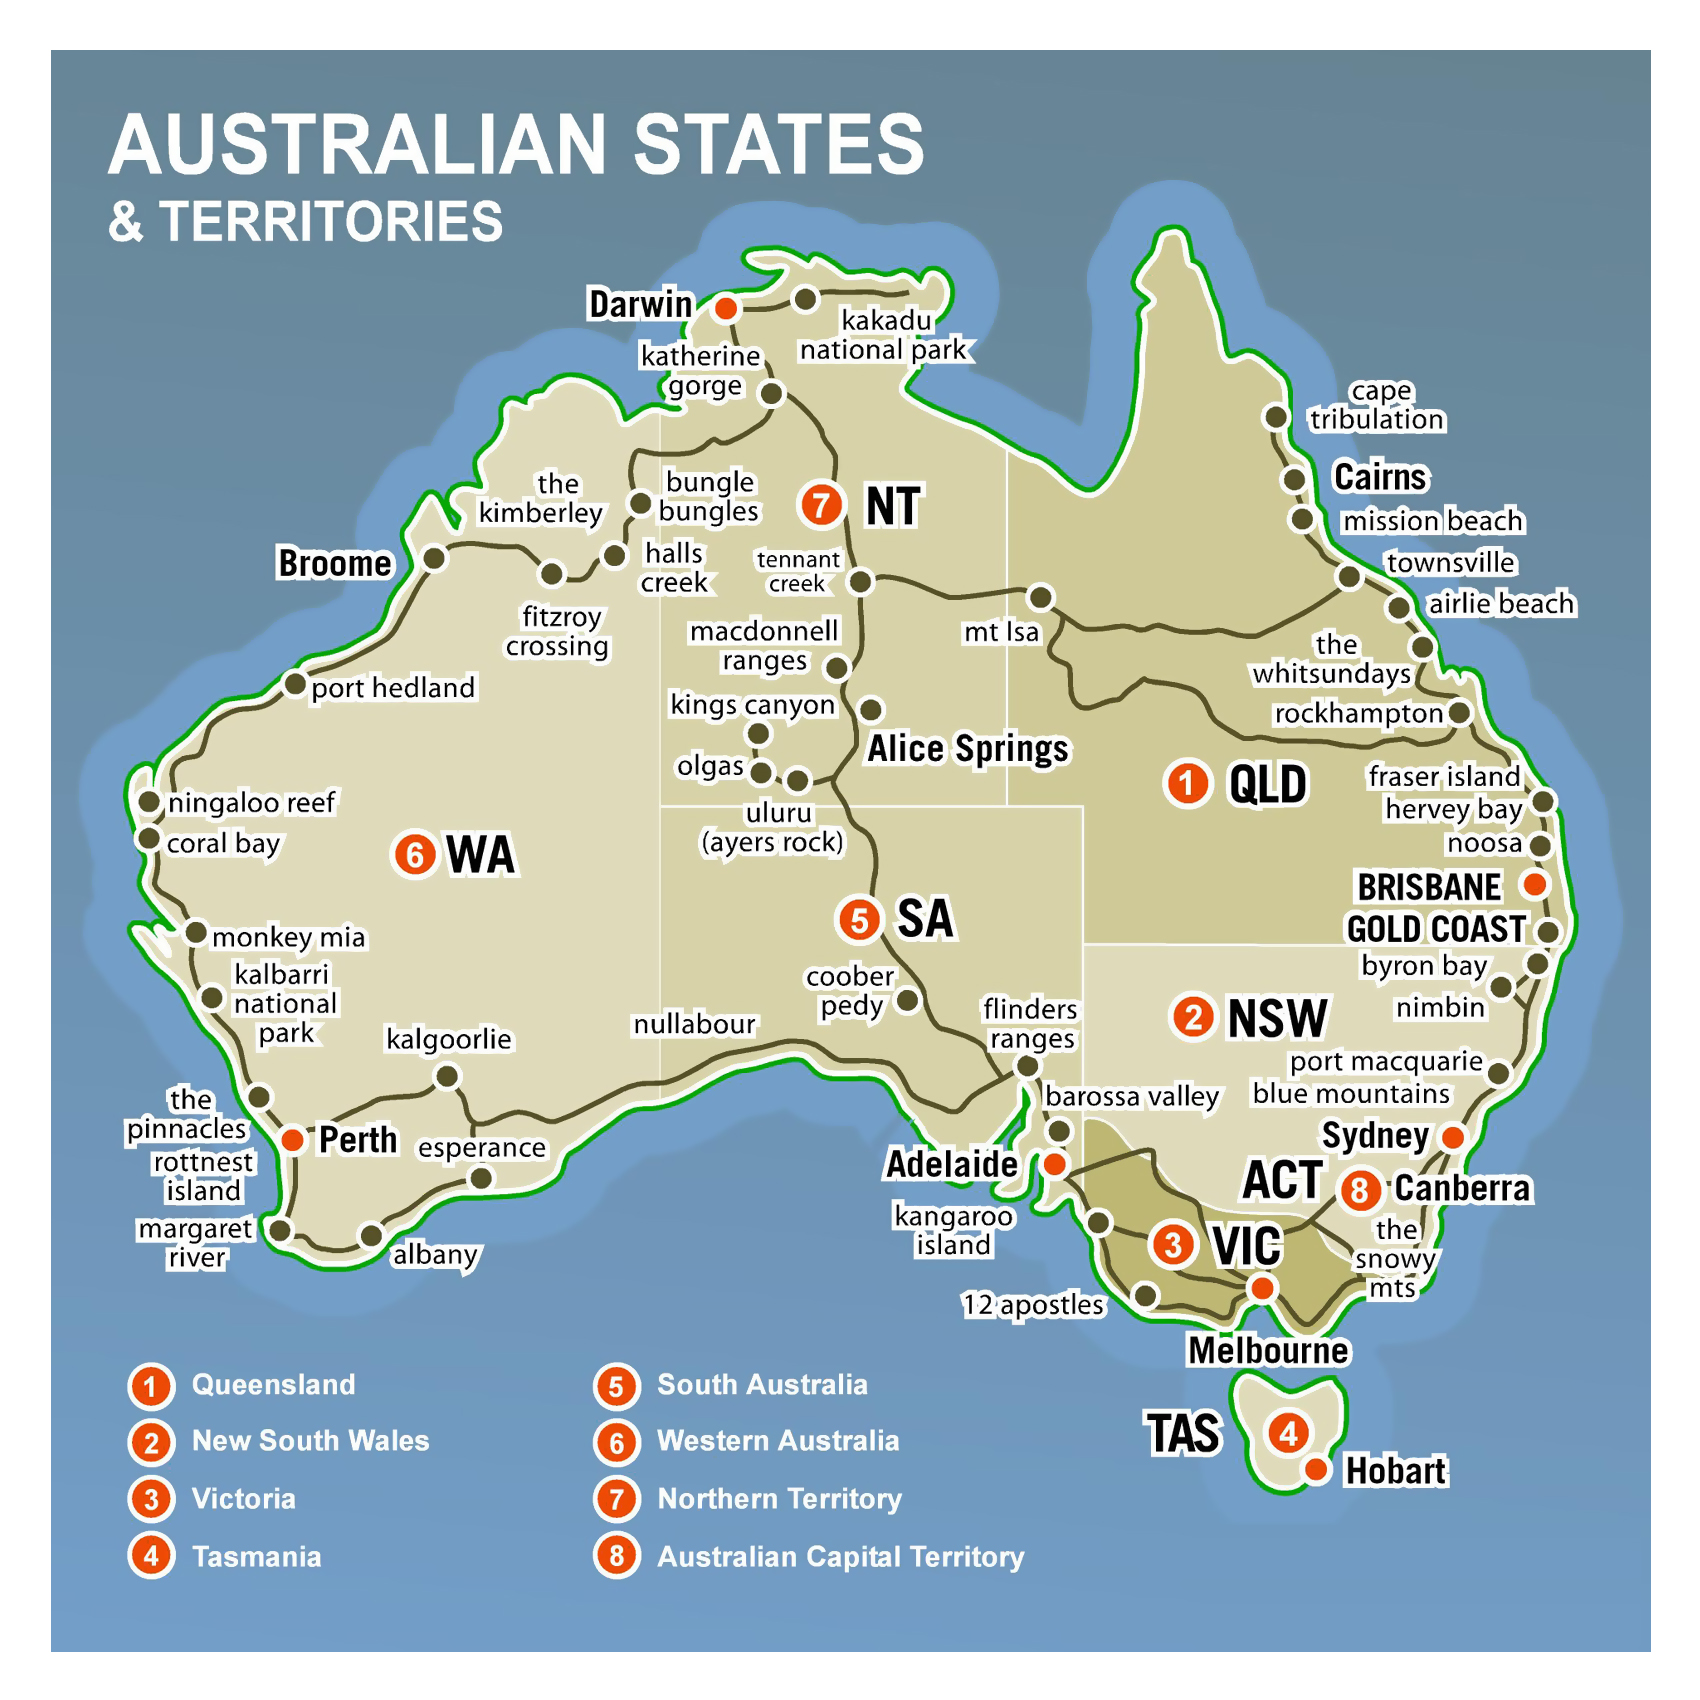 large-detailed-australia-states-and-territories-map-australia